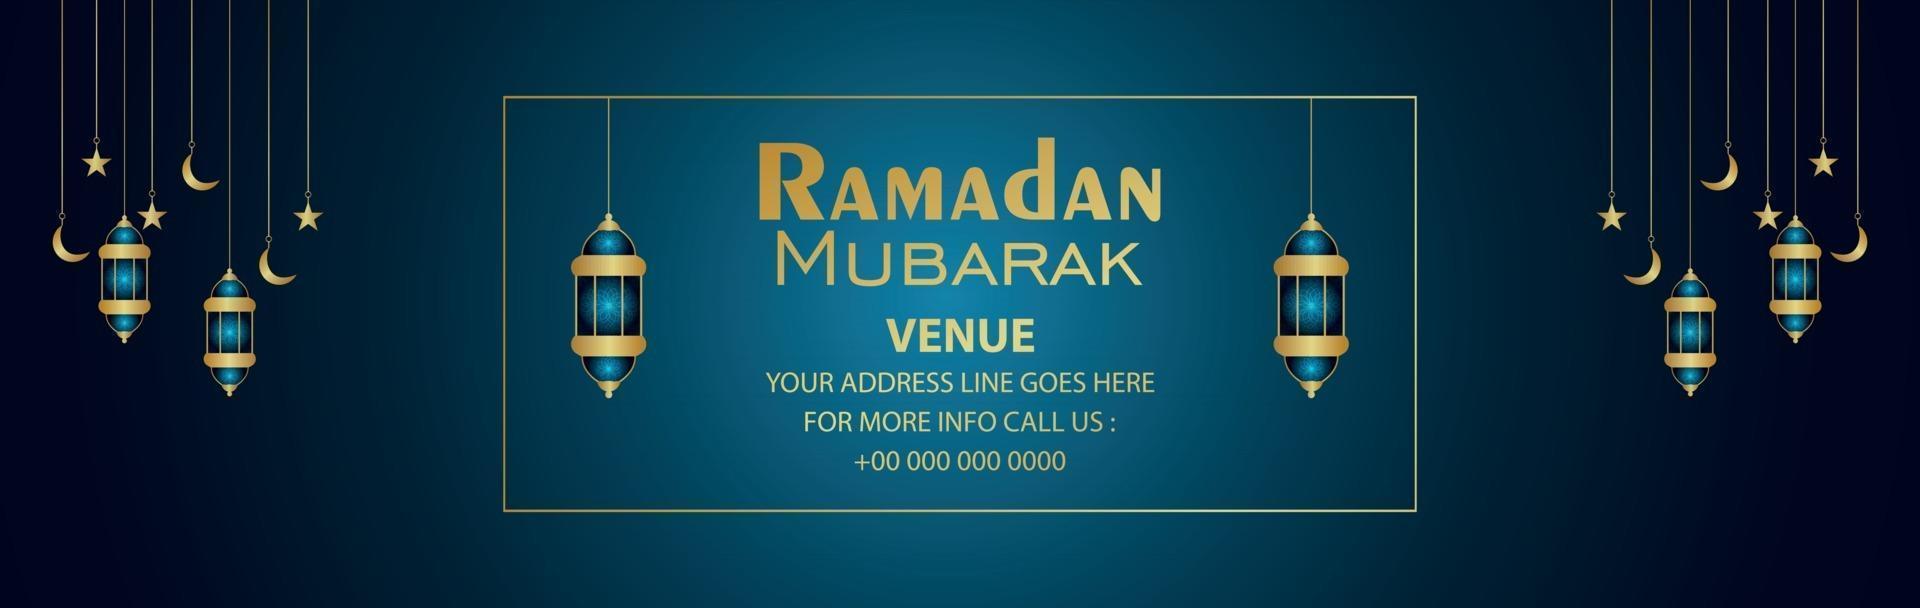 Islamic festival ramadan kareem invitation banner or header with creative lantern vector